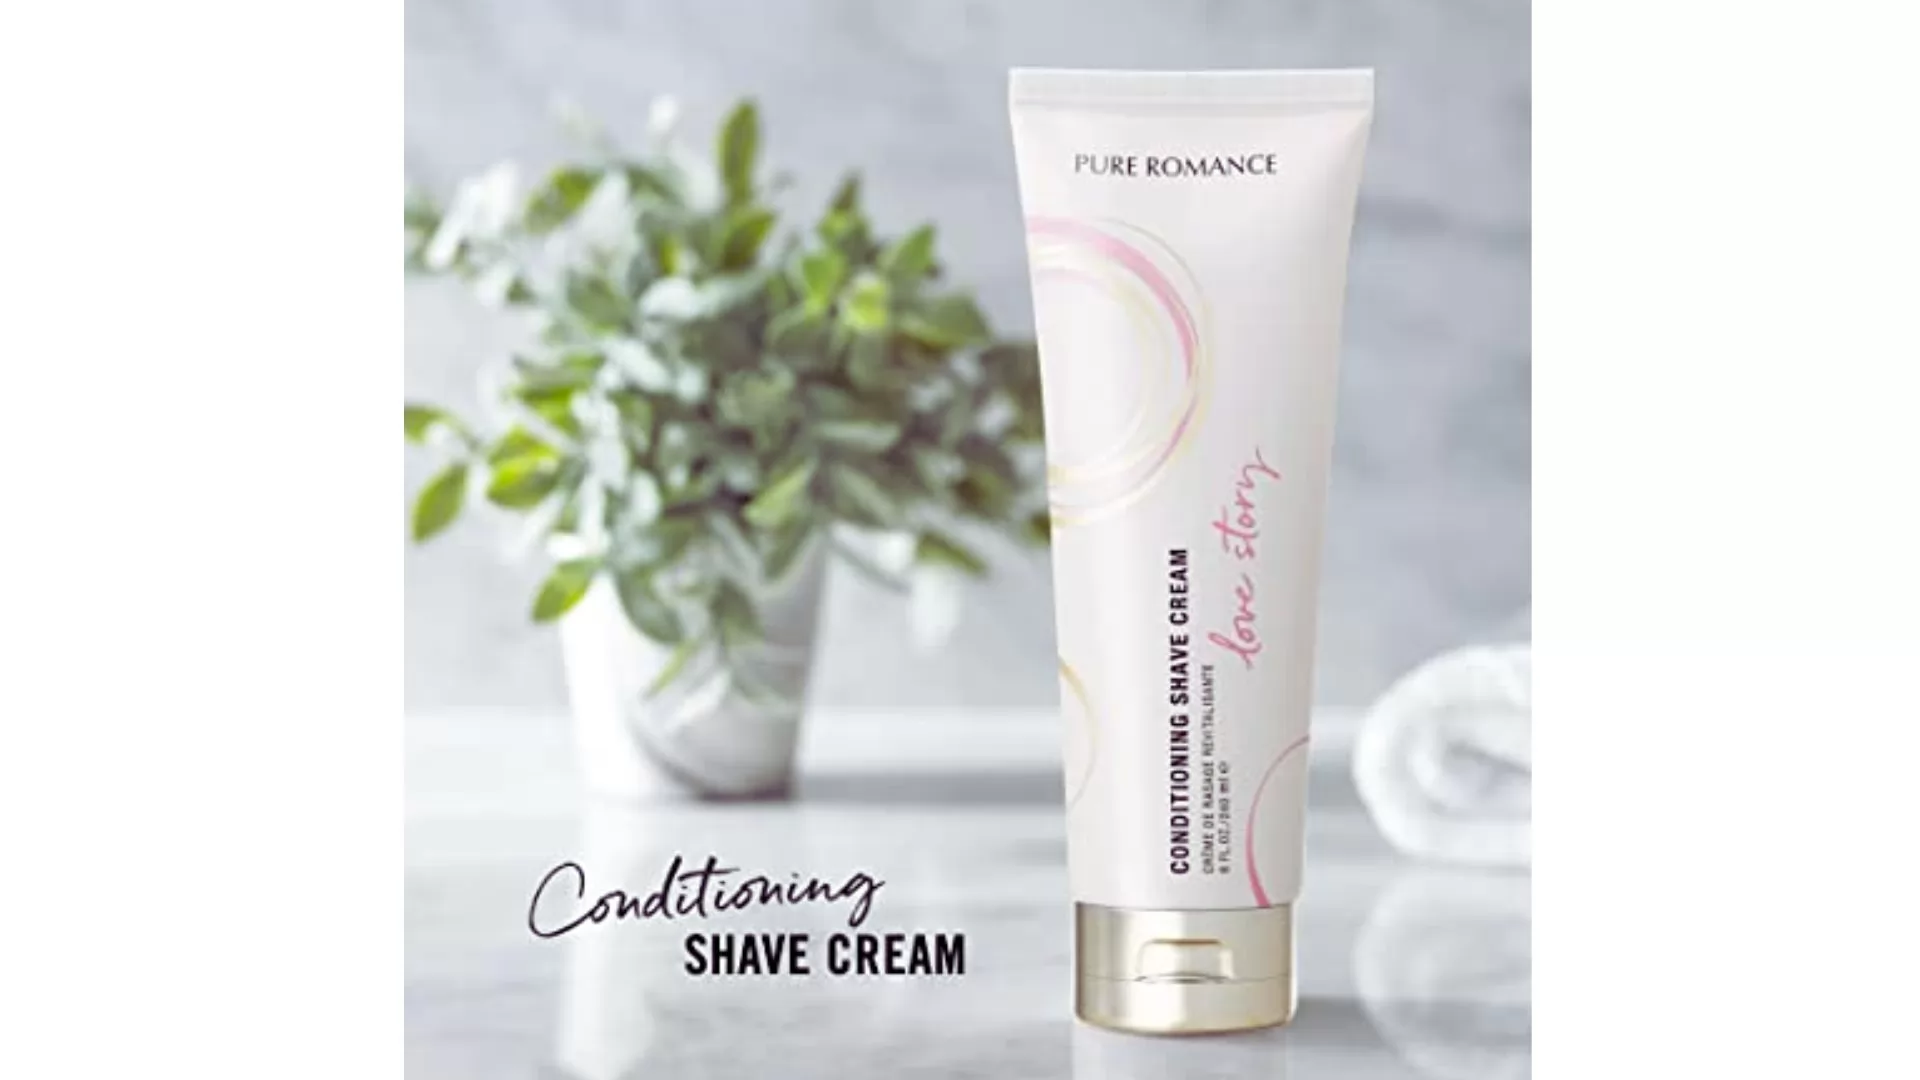  Pure Romance Conditioning shave cream